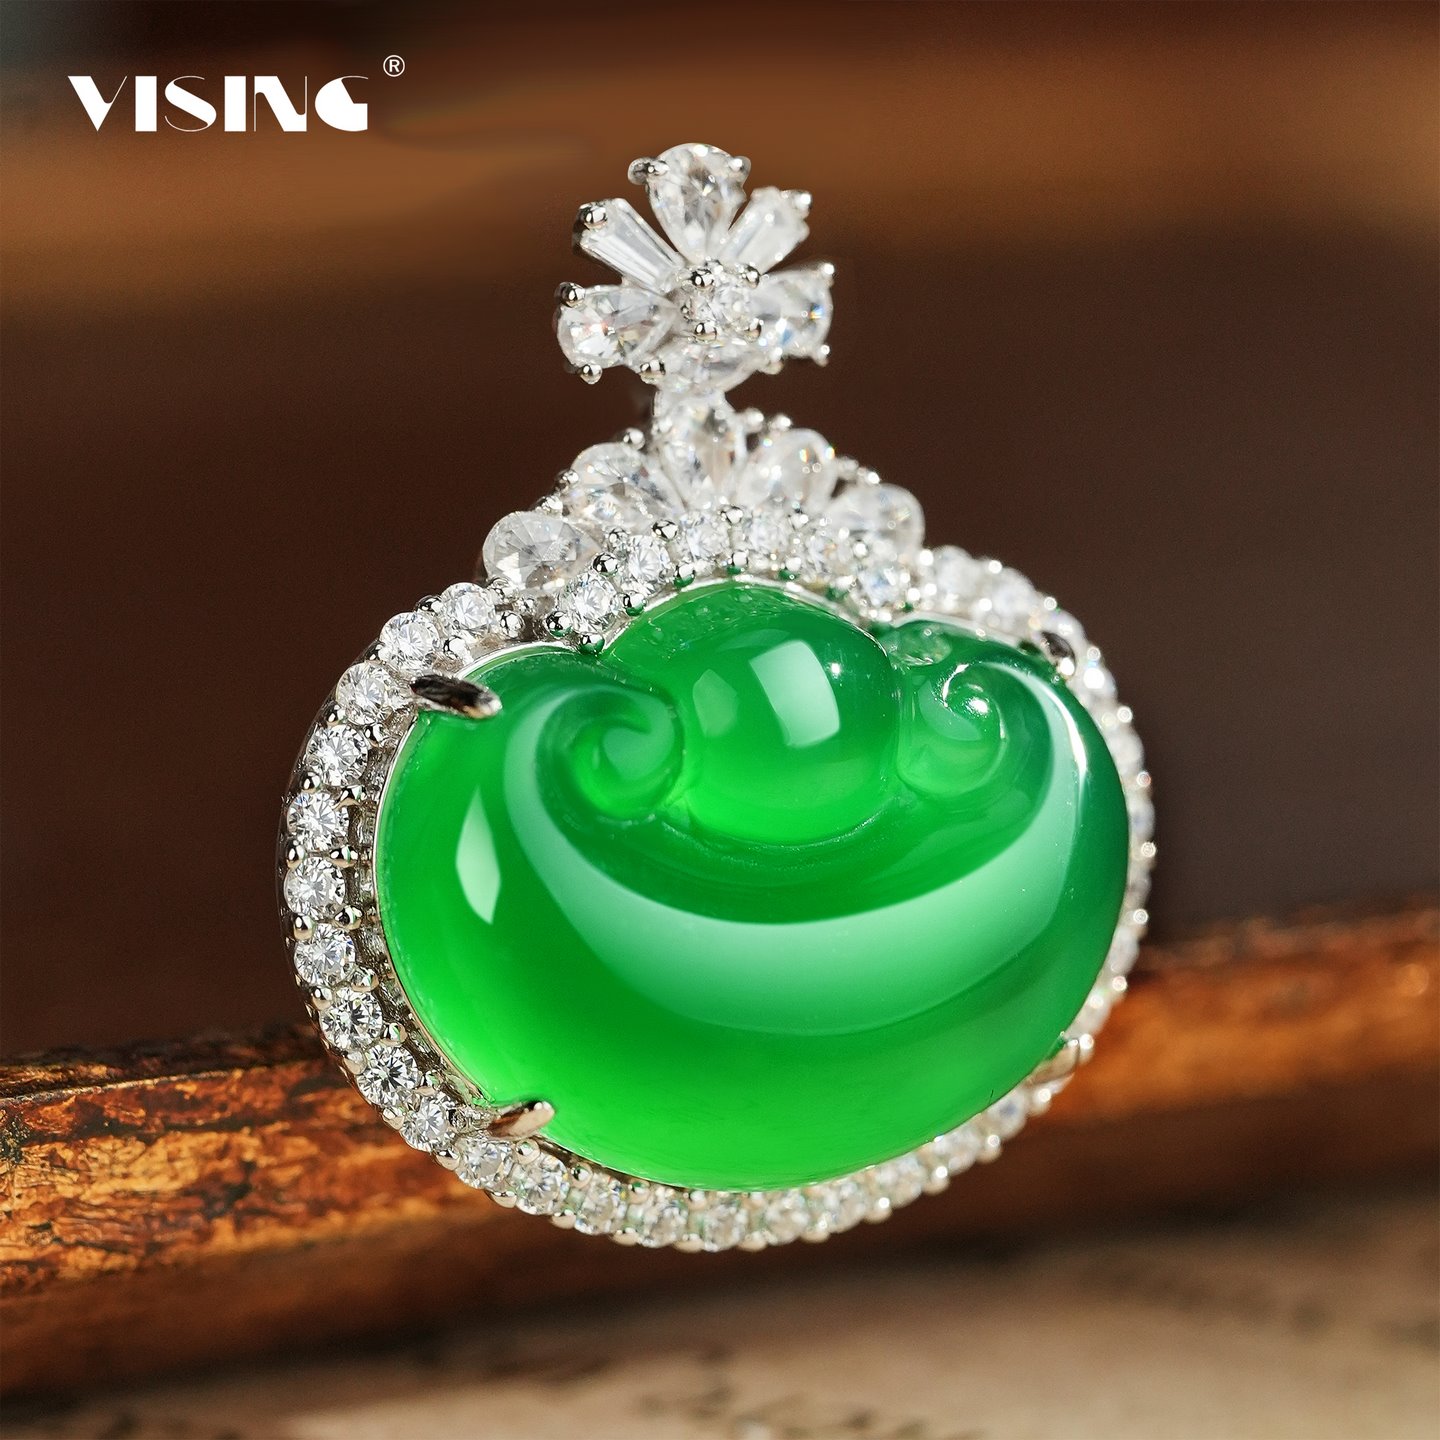 VISING珠宝巴西绿玉髓玛瑙如意头吊坠项链国风送礼媲美翡翠高碳钻